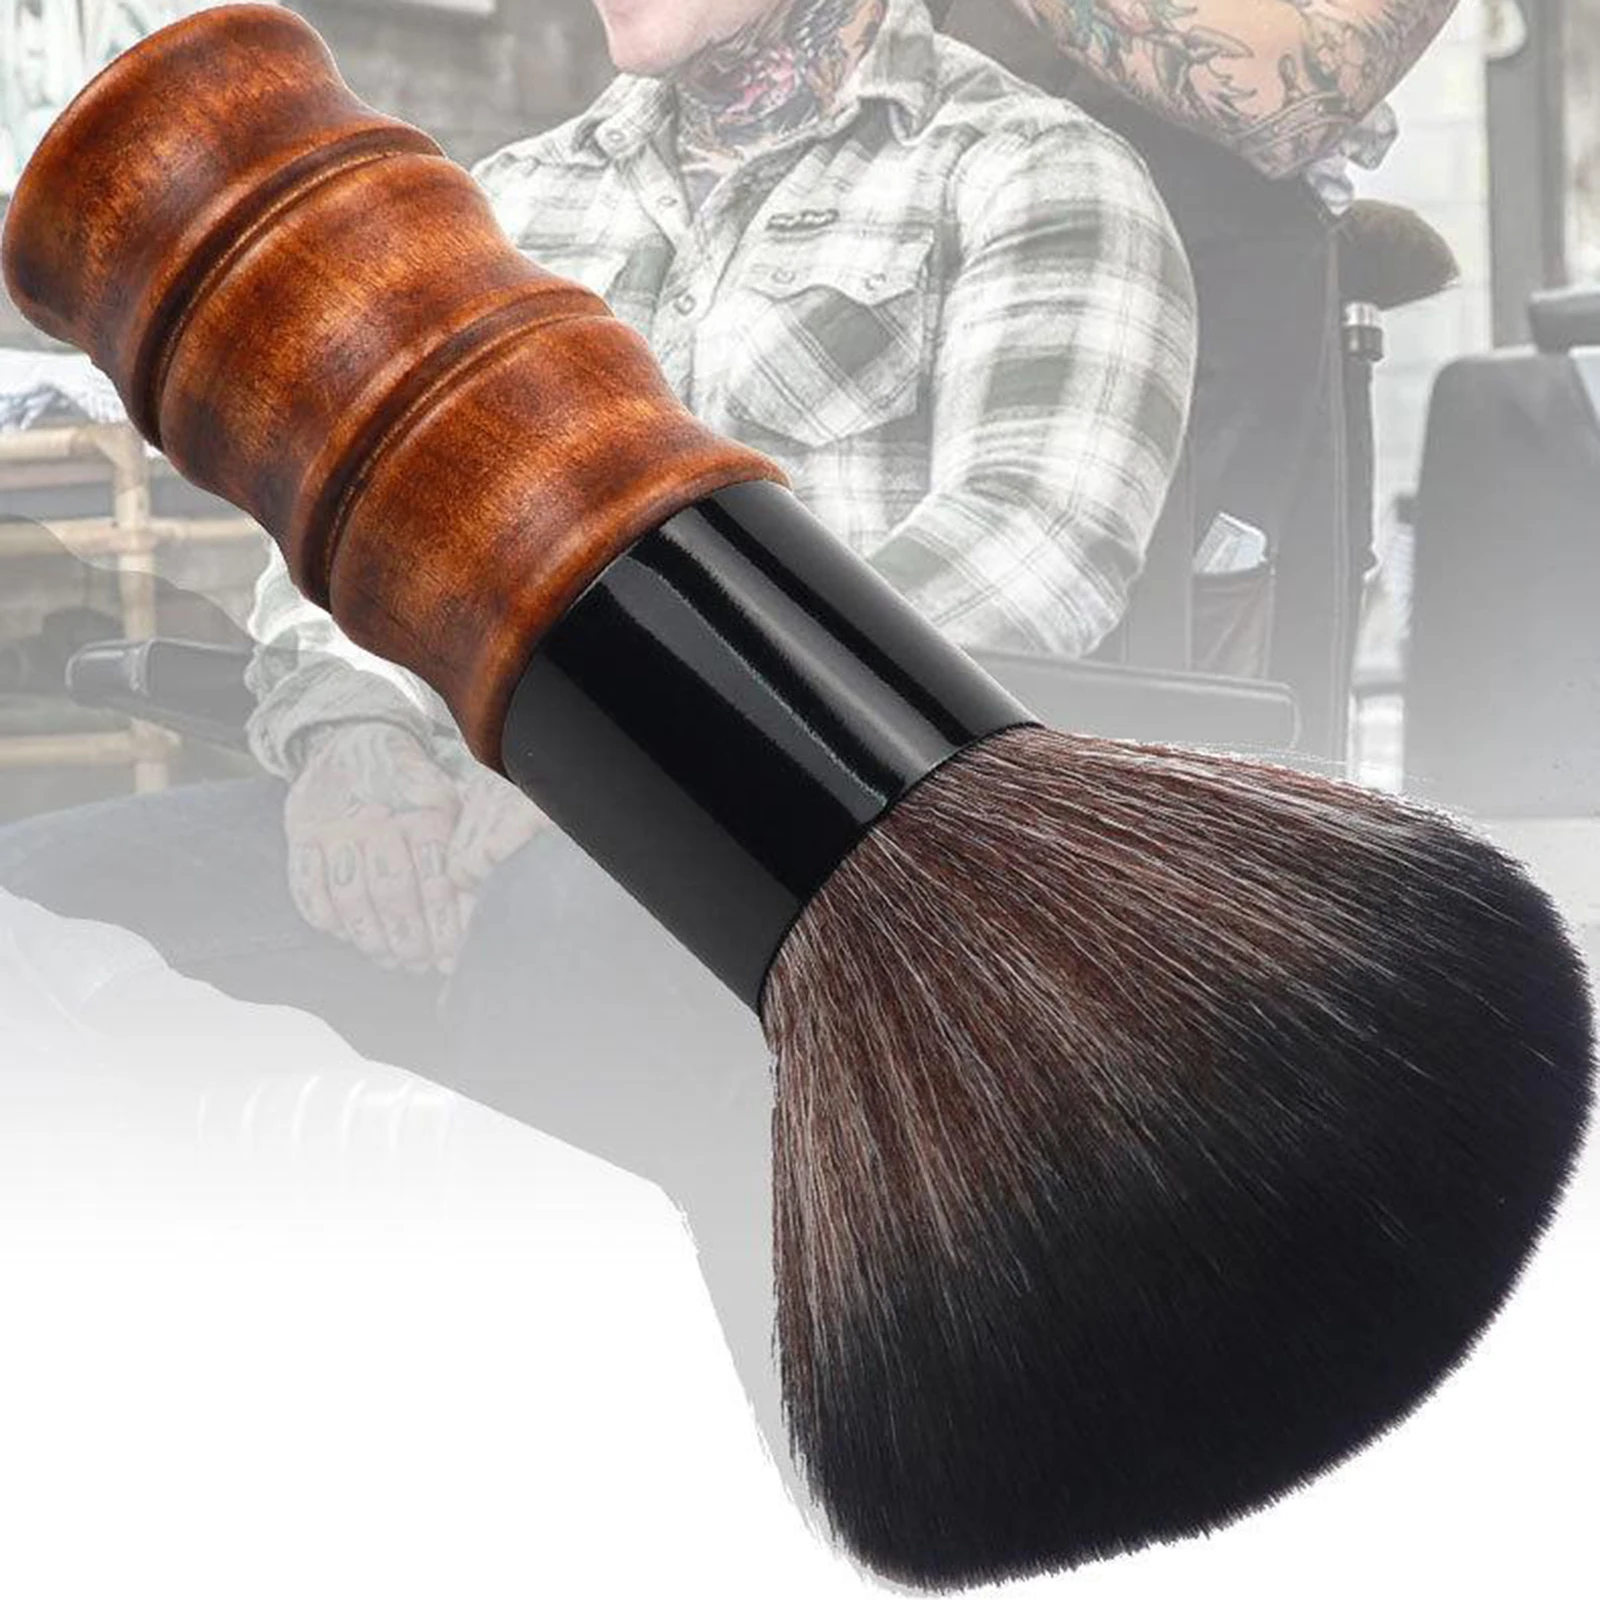 Neck Hair Brush Natural Fiber Cleaning Kit for Hair Sweep Hair Styling Tool Soft Black Neck Face Duster Beard Brushes 